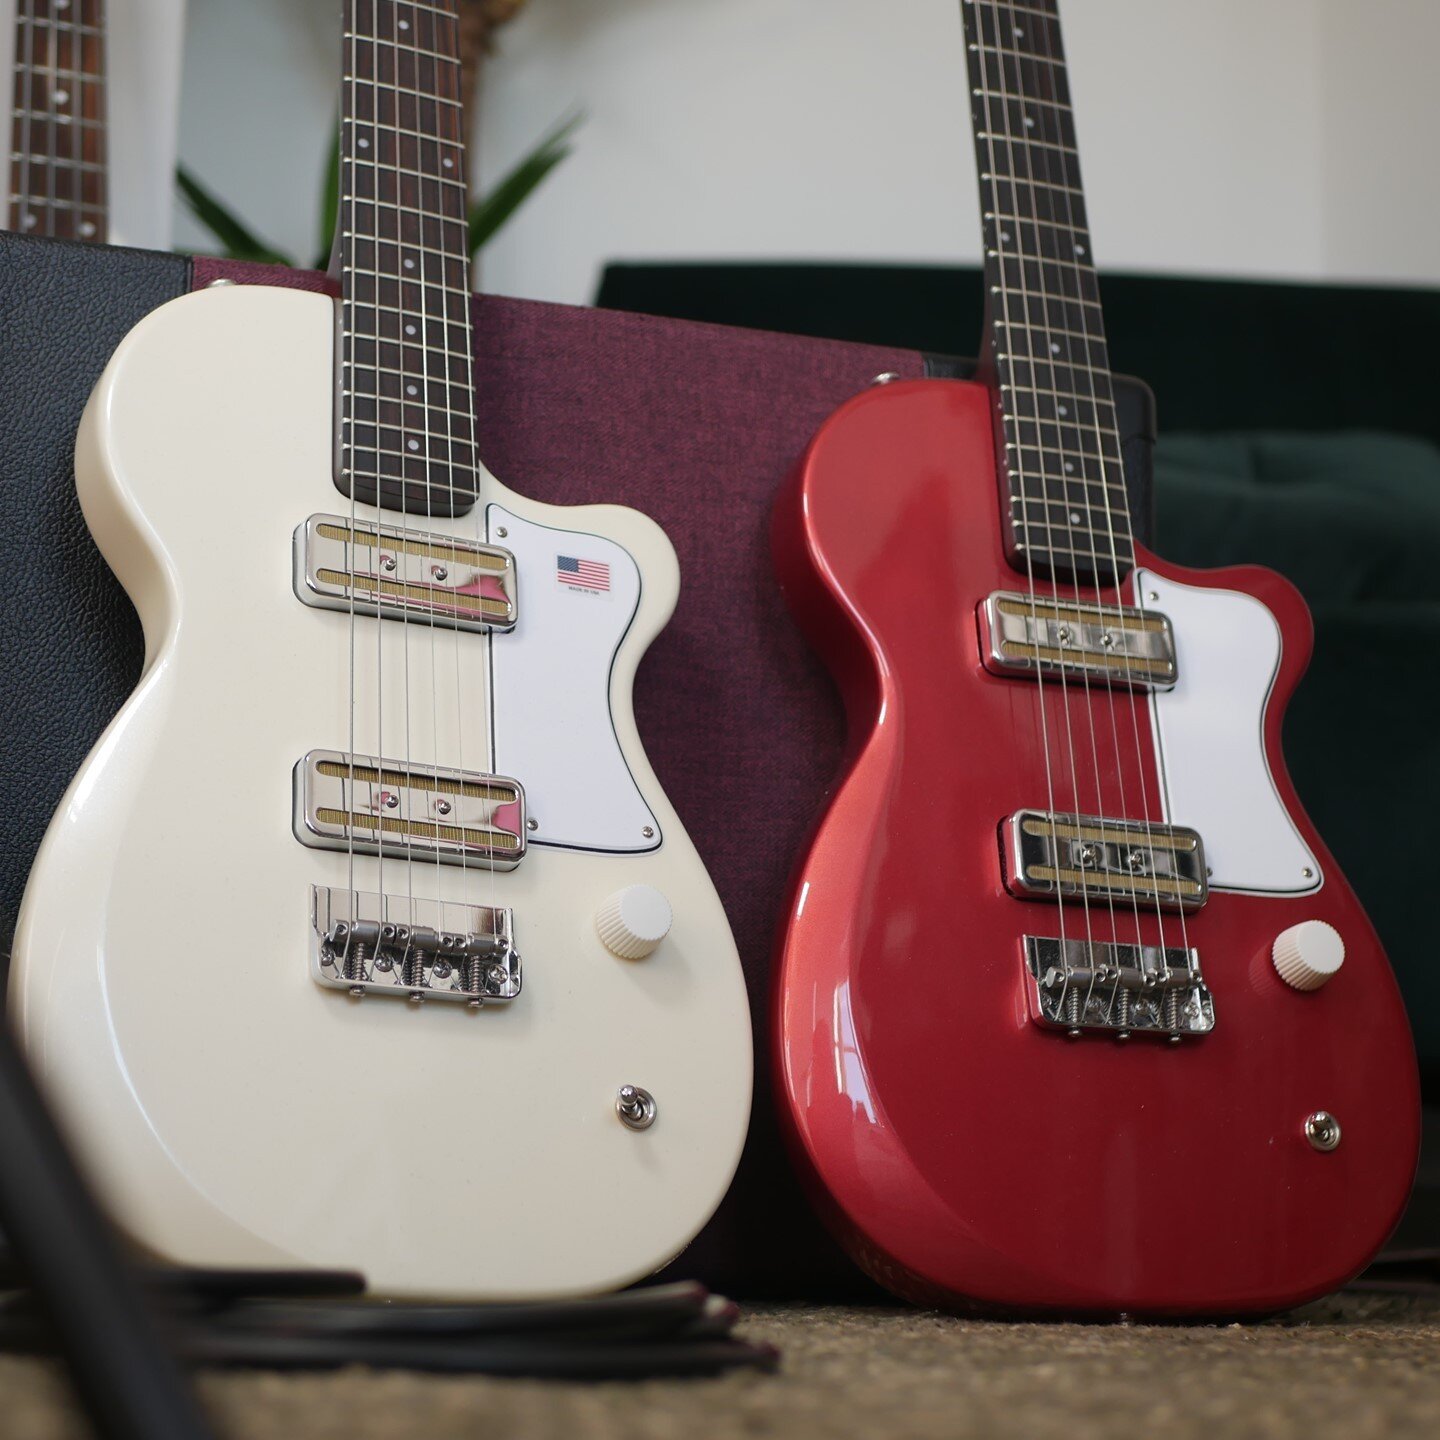 Which colour @harmonyguitars would you choose? ⁠
____________________________________________⁠
#guitarist #guitarlove #harmonyguitars #gibson #guitarsofinstagram  #guitarporn #rocknroll #instamusic #guitarplayer #geartalk #knowyourtone #guitarsdaily 